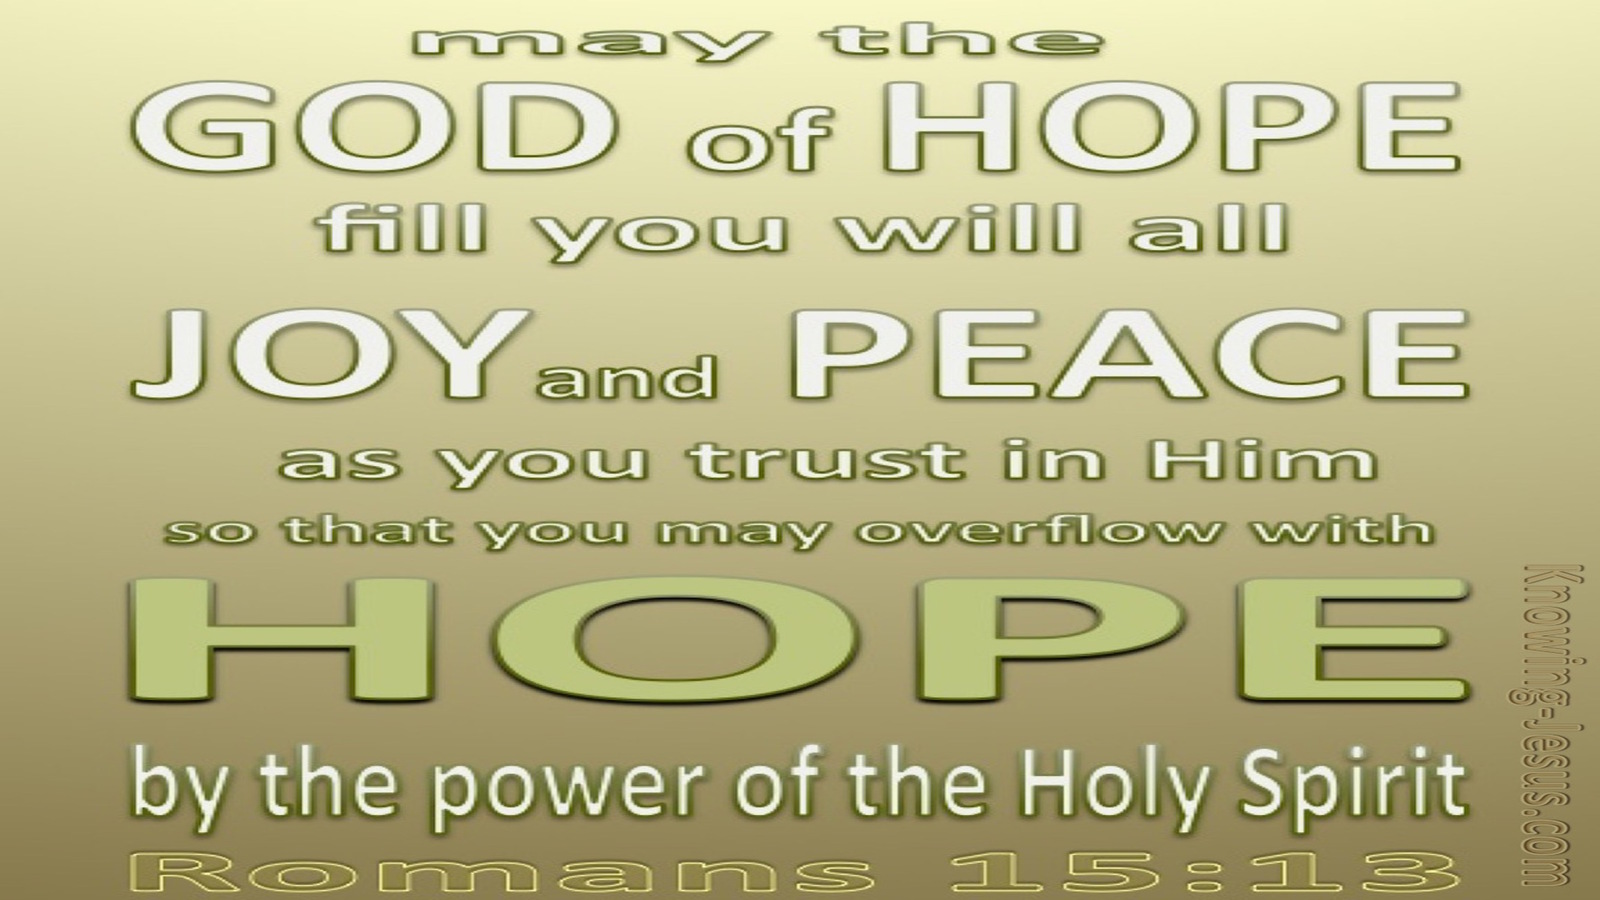 Romans 15:13 God Of Hope (cream)